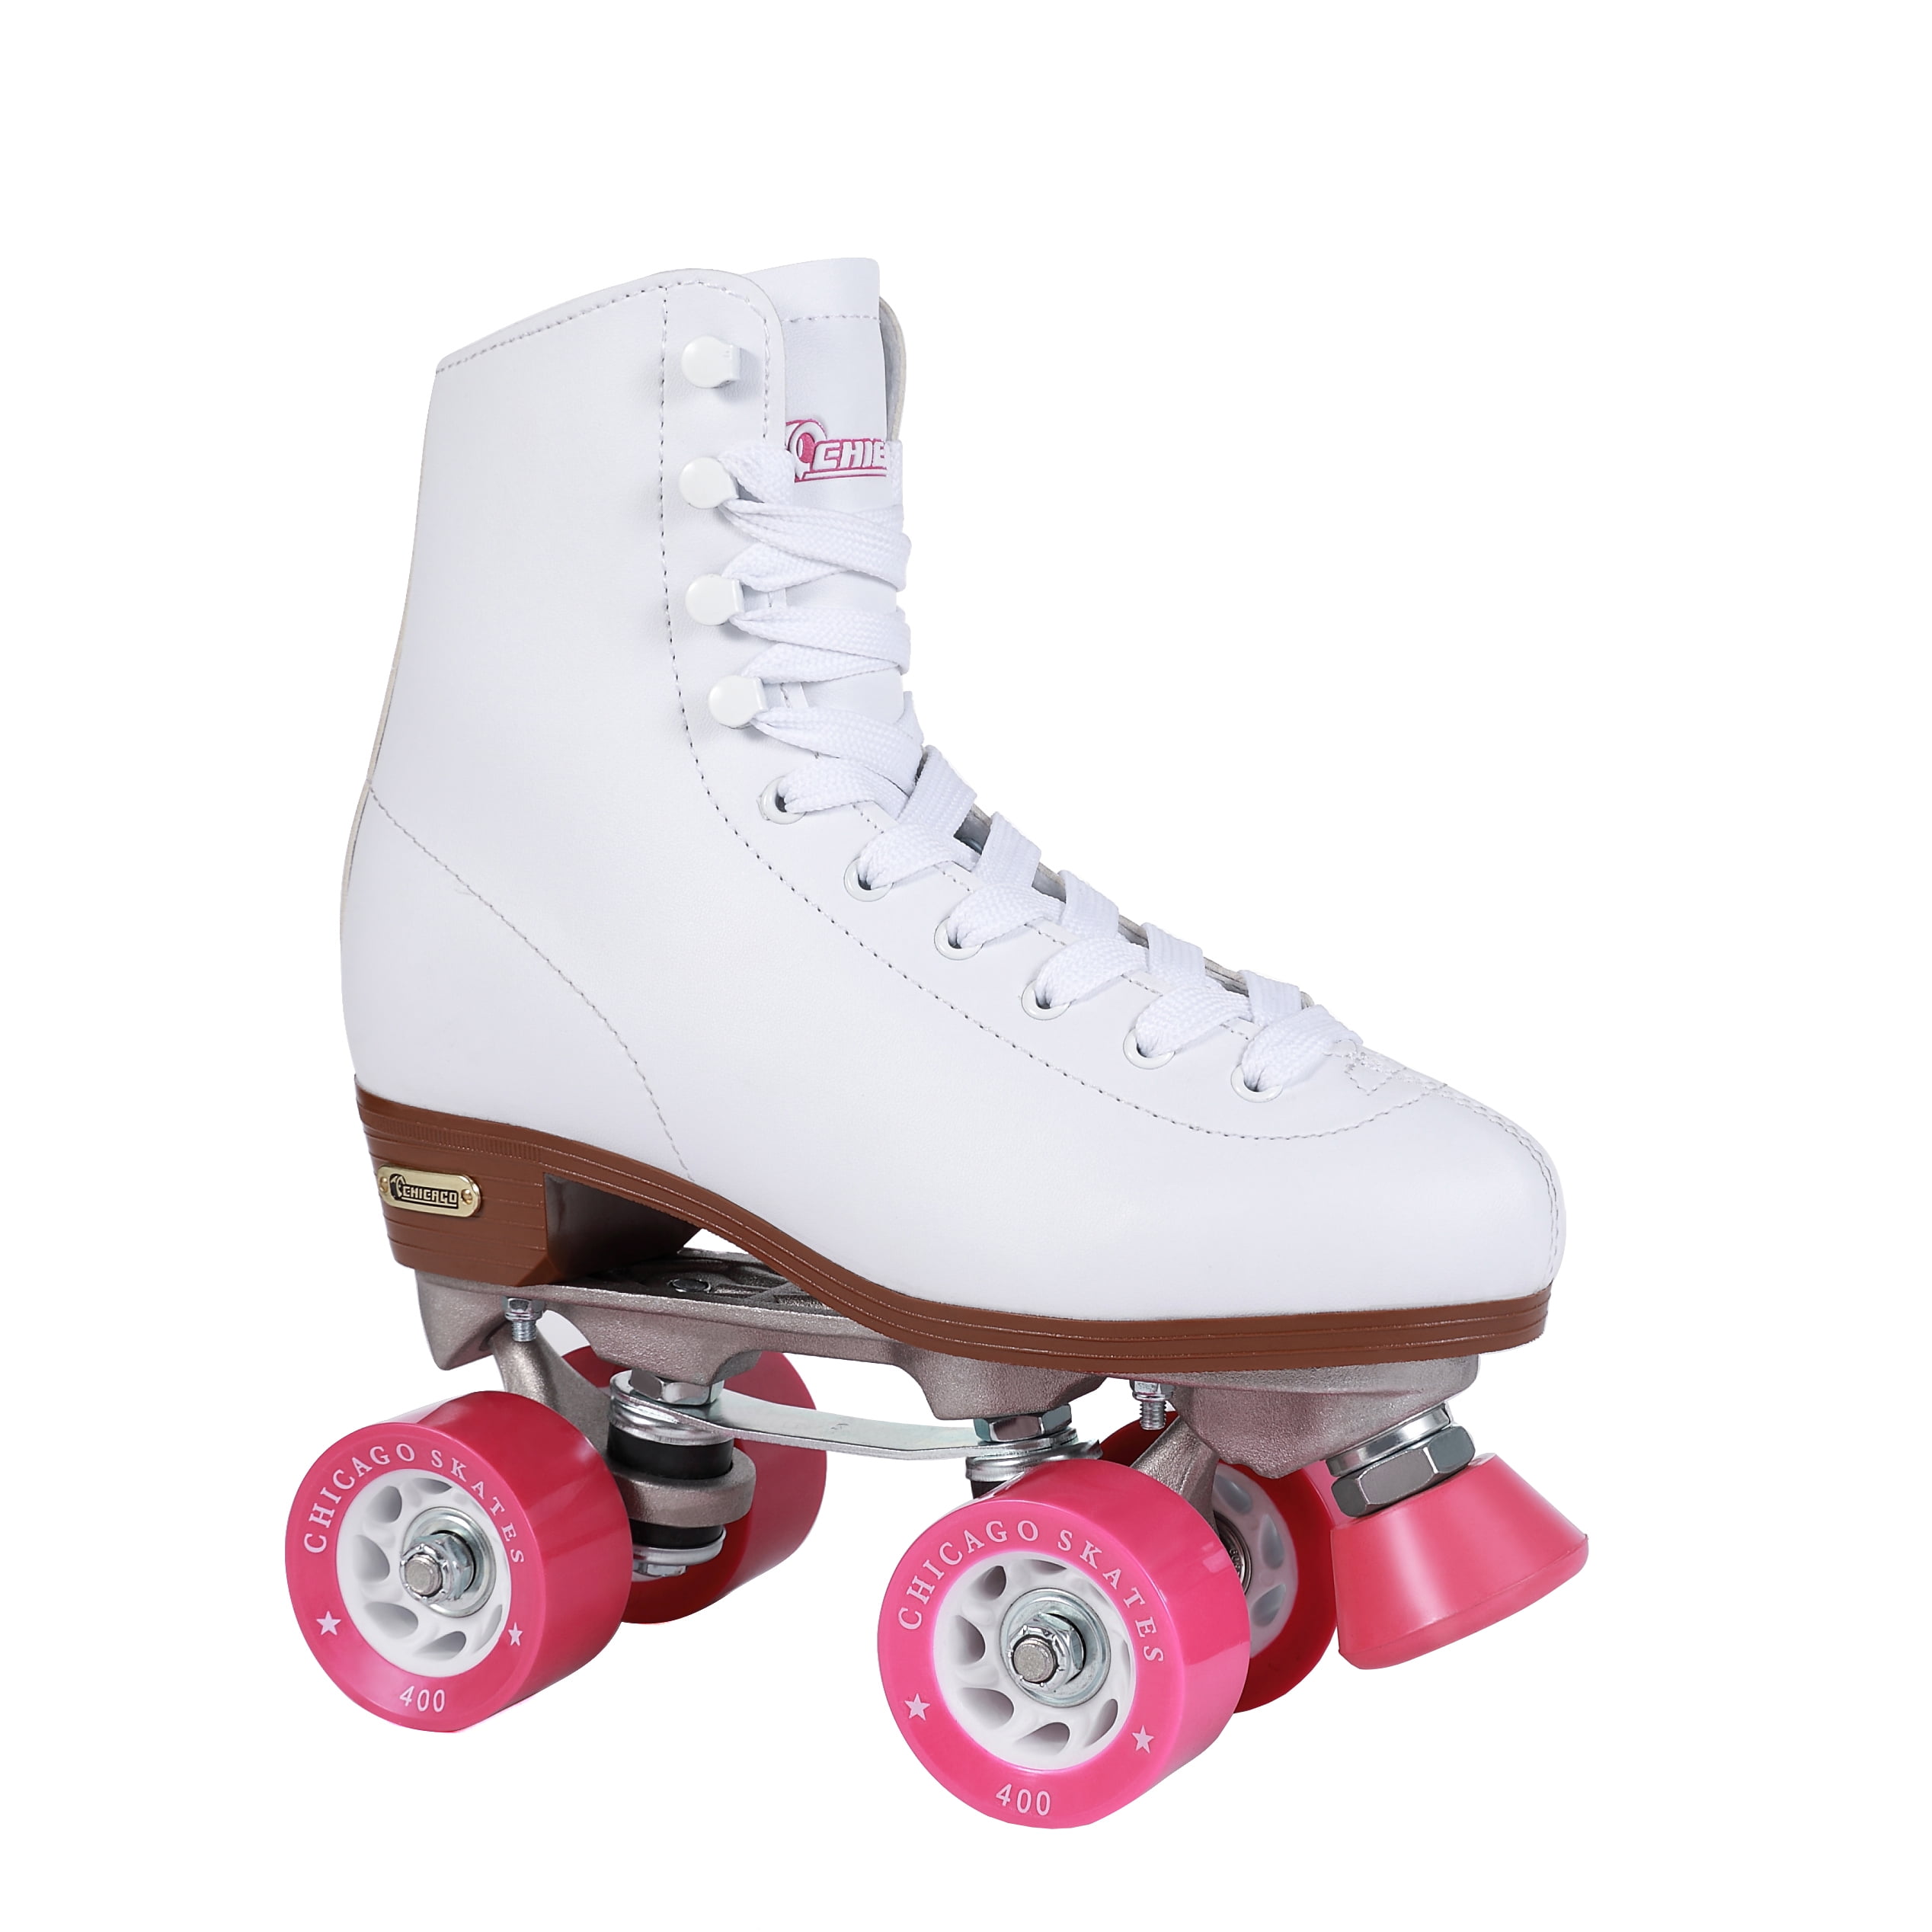 White US 8 for sale online Chicago Ladies Classic Quad Roller Skates 